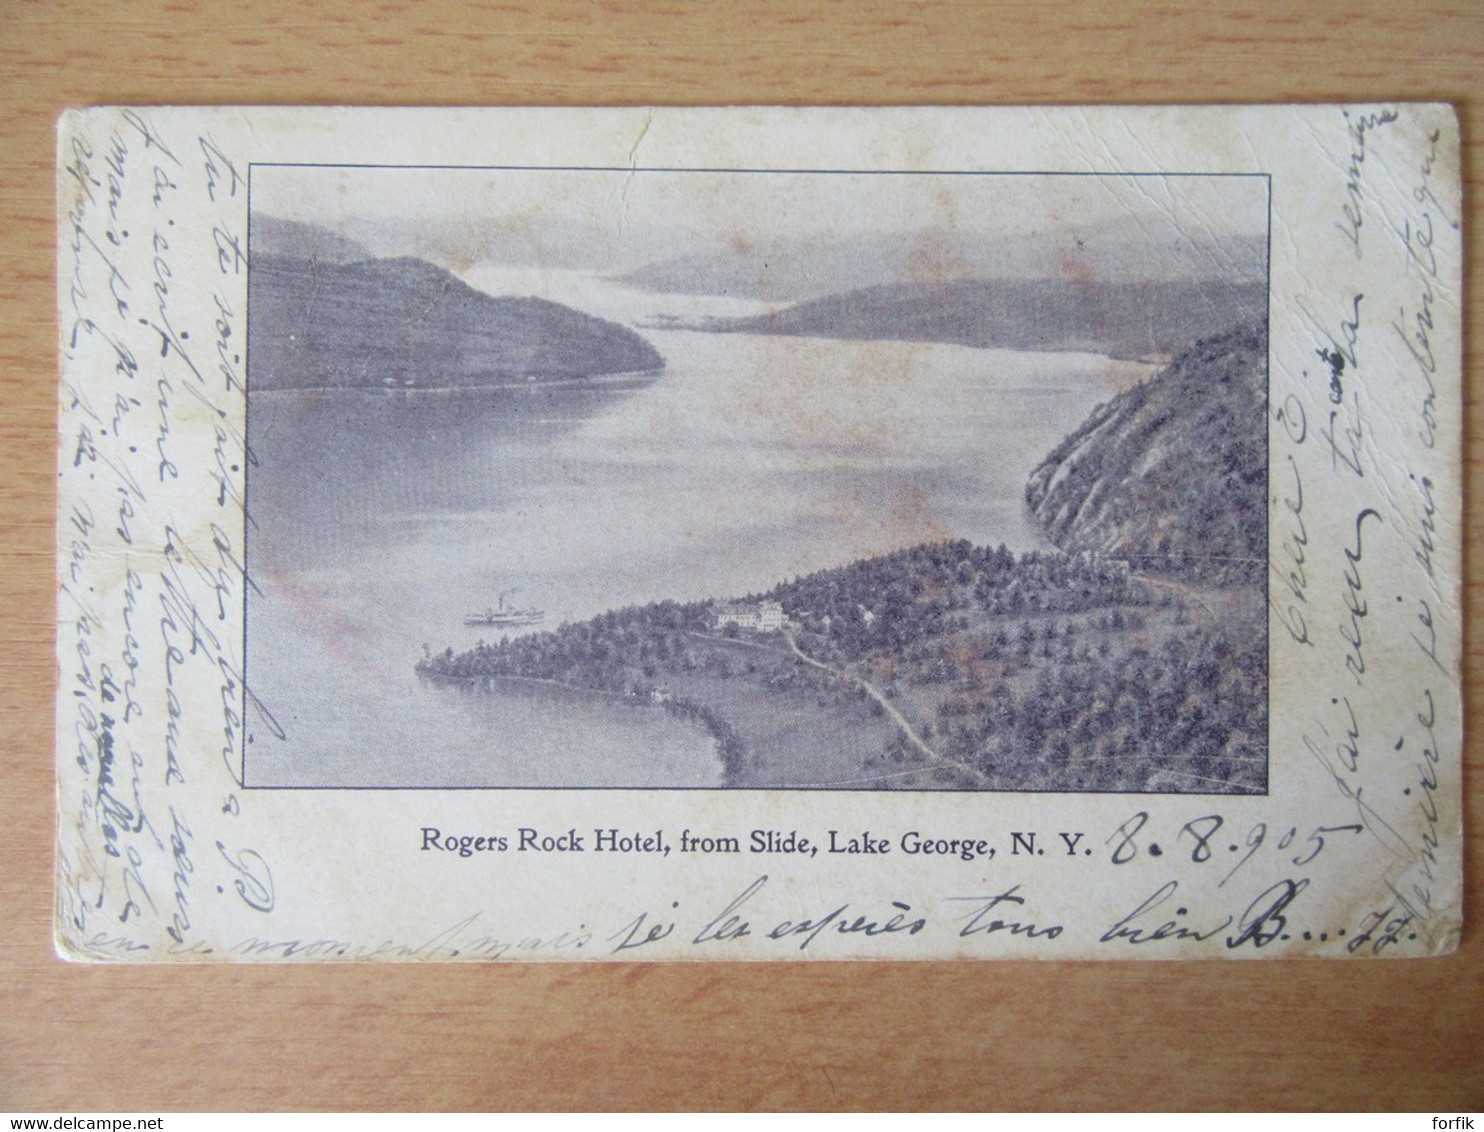 Etats-Unis - Lake George - Rogers Rock Hotel - Carte Circulée Vers Peïra Cava En Franc Een 1905 - Lake George